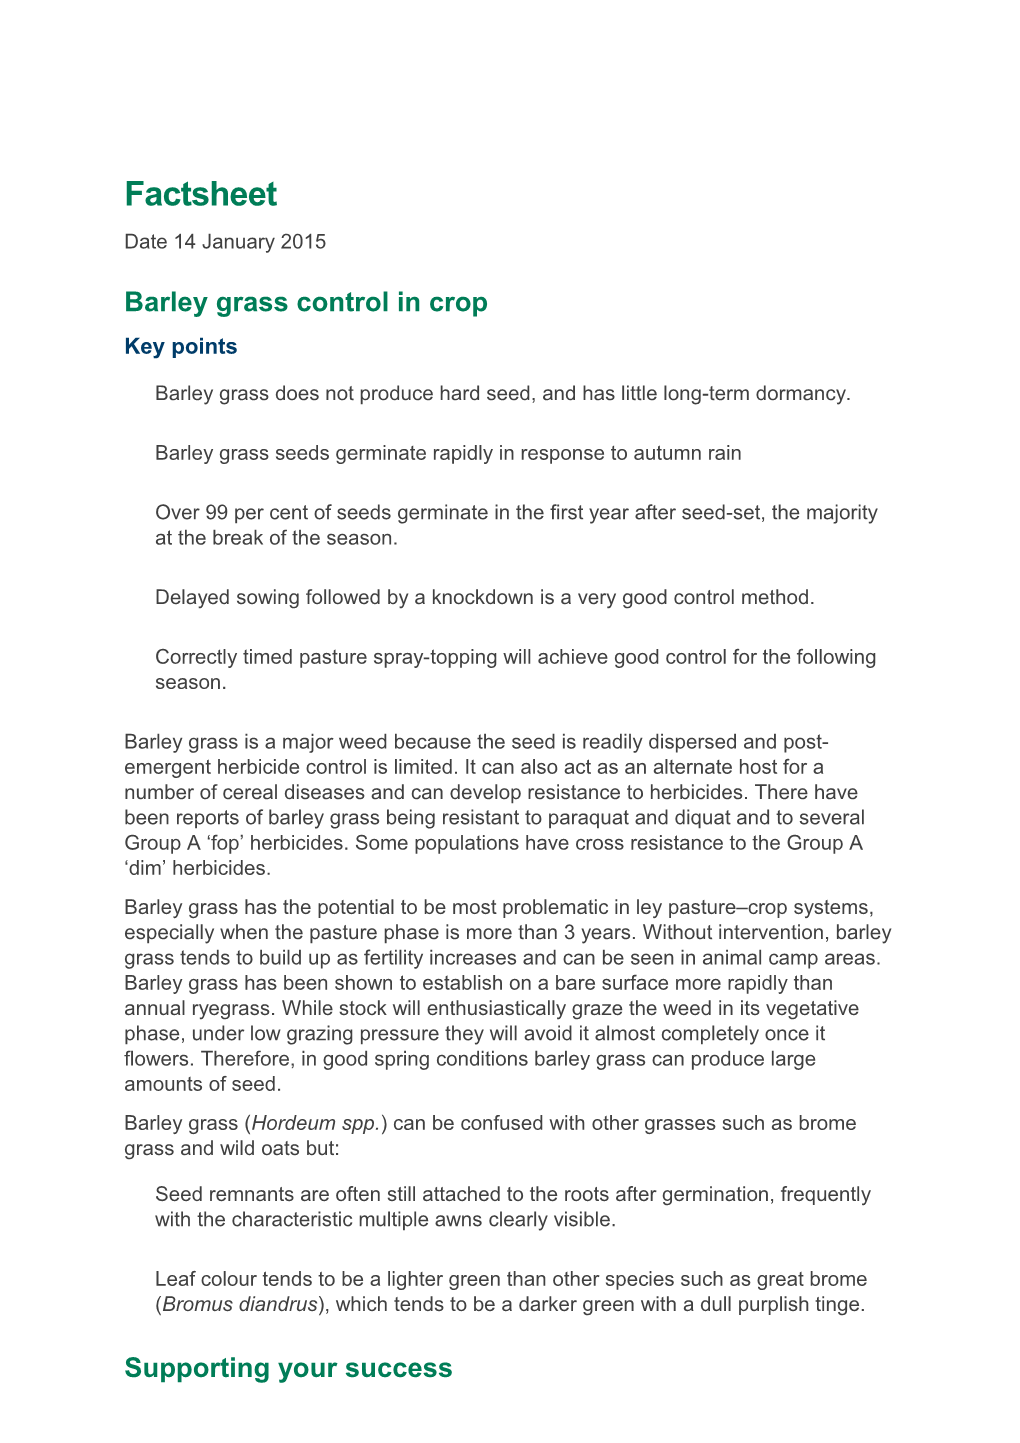 Barley Grass Control in Crop